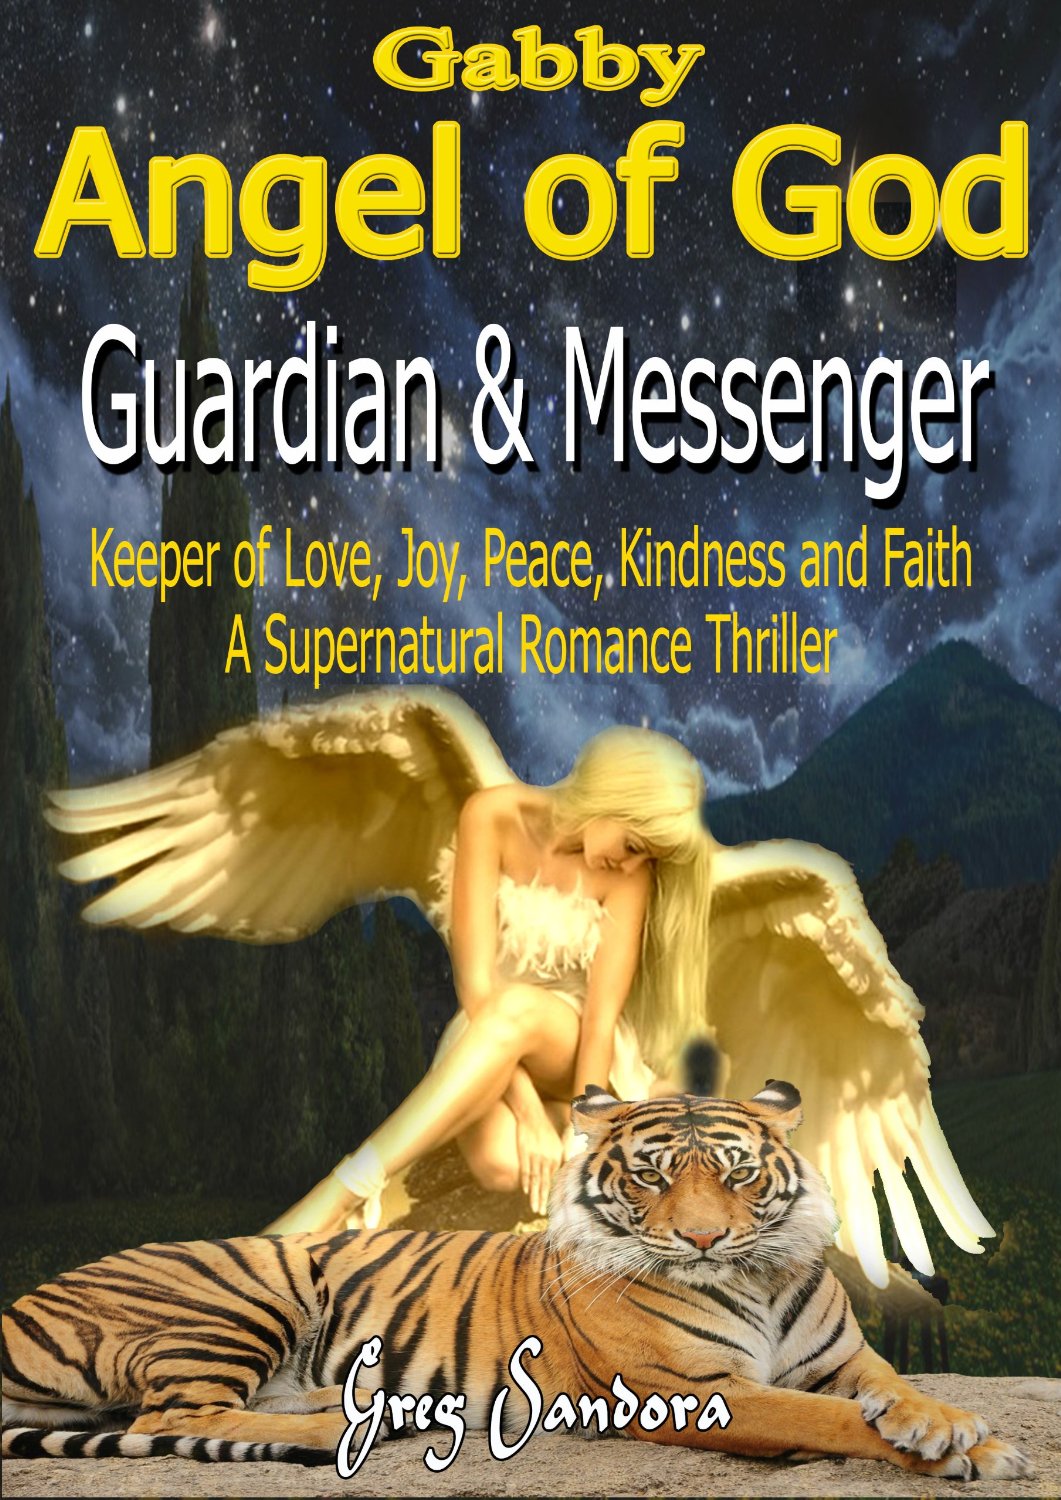 Gabby, Angel of God: Guardian and Messenger by Greg Sandora